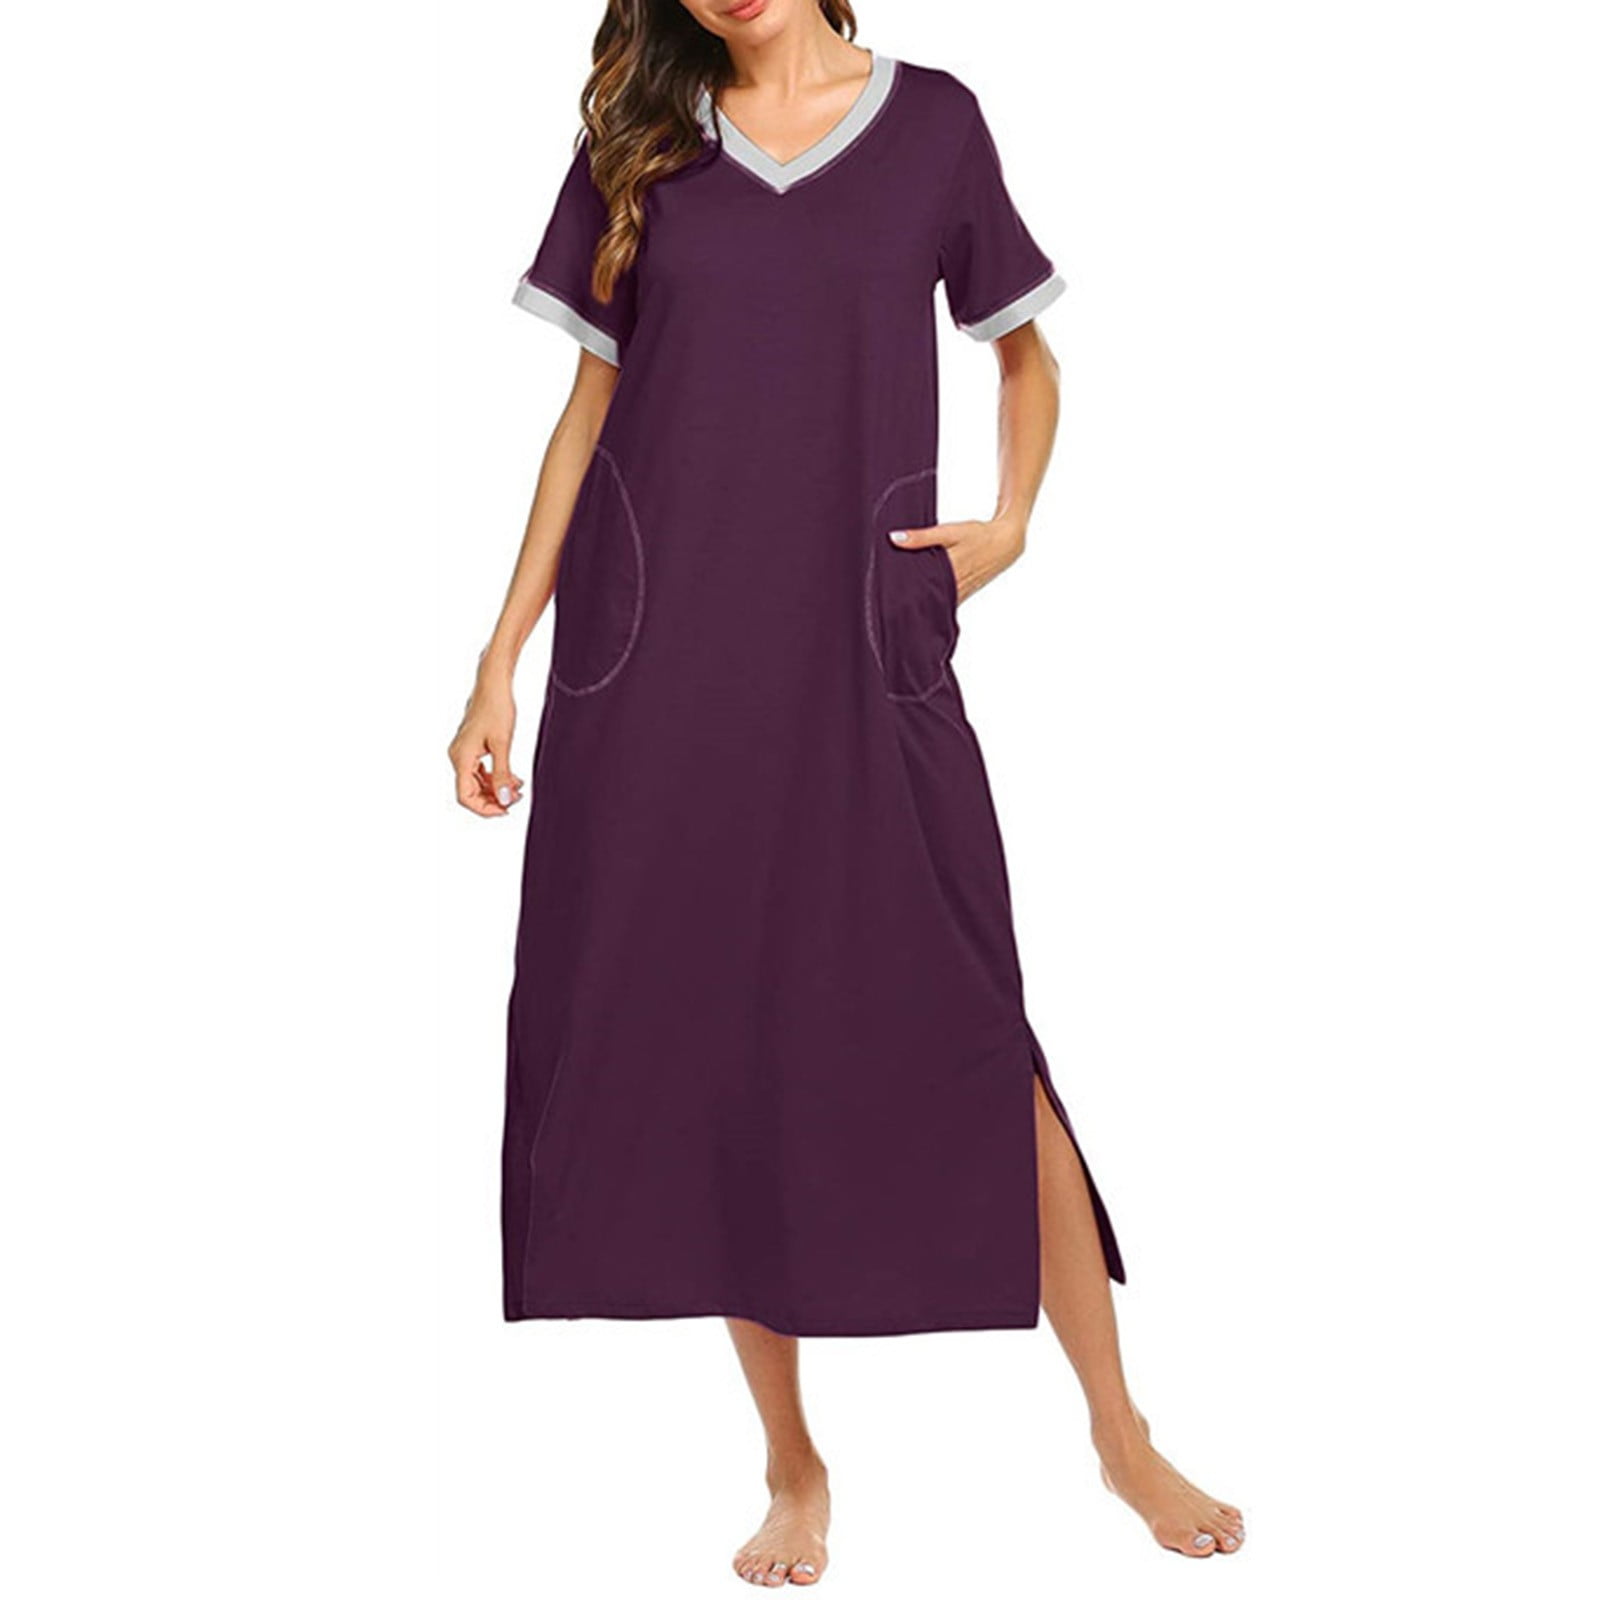 Hvyesh Nightgowns for Women with Built in Bra Removable Pads Nightshirt  Dress Sleepwear Sleeveless Tank Nightdress 